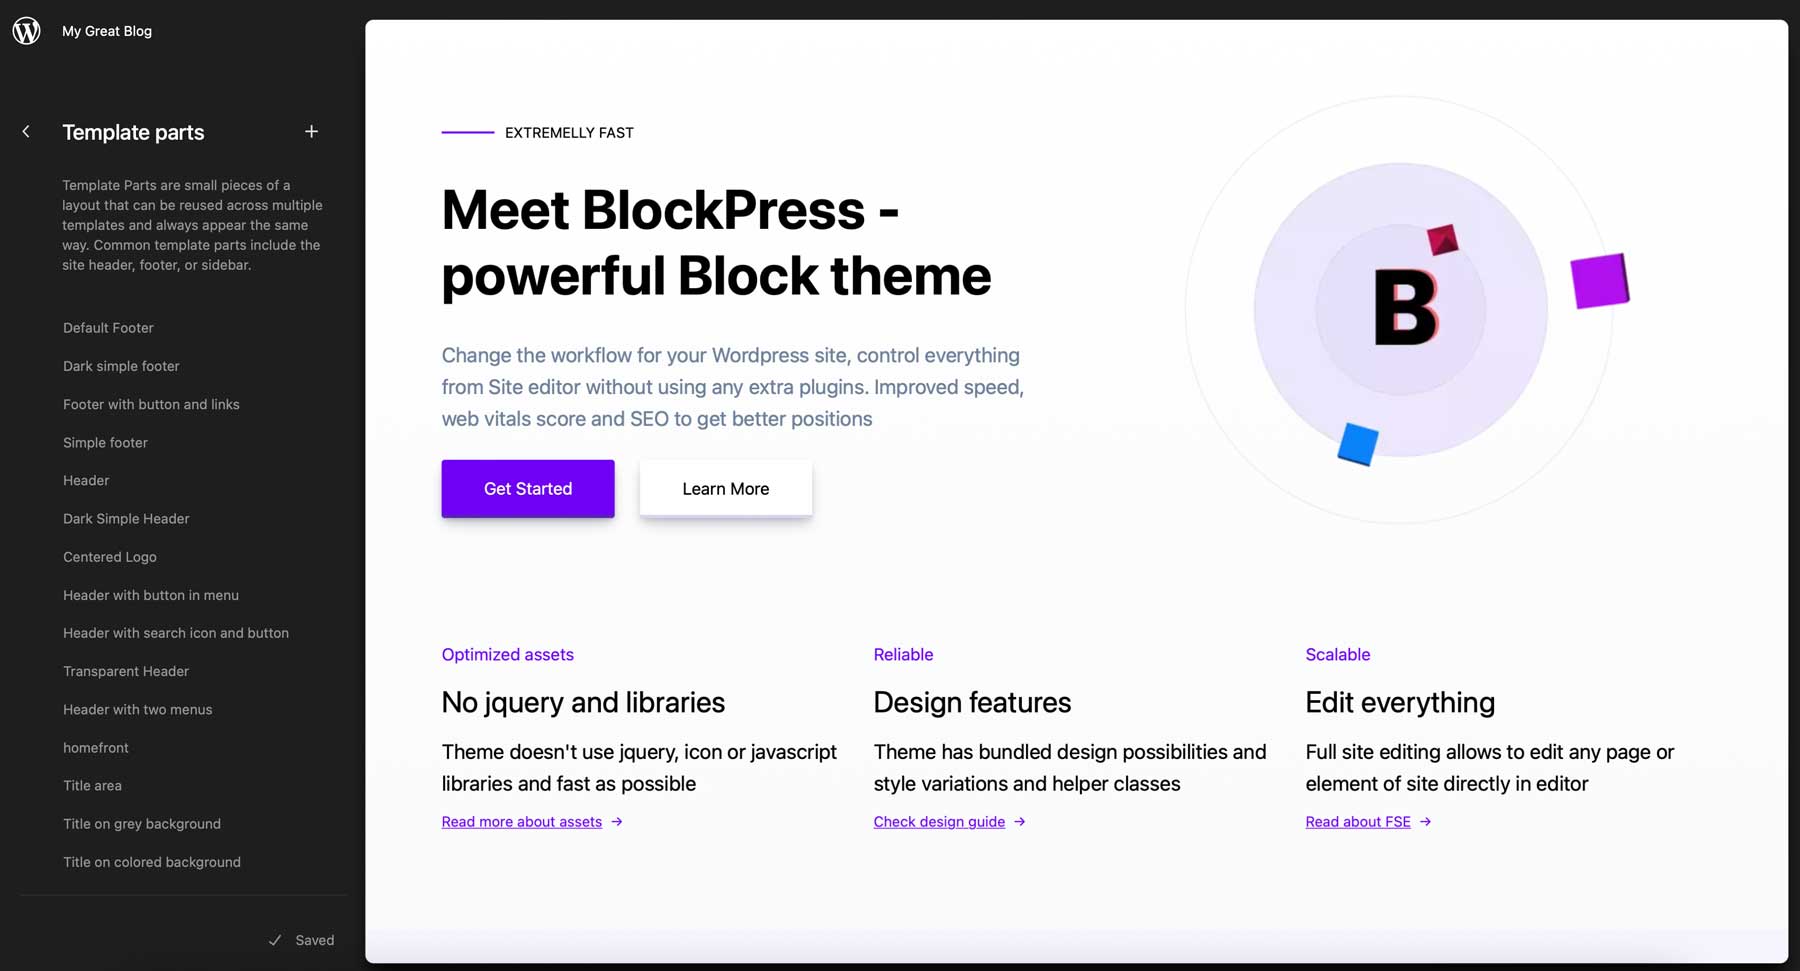 BlockPress template parts